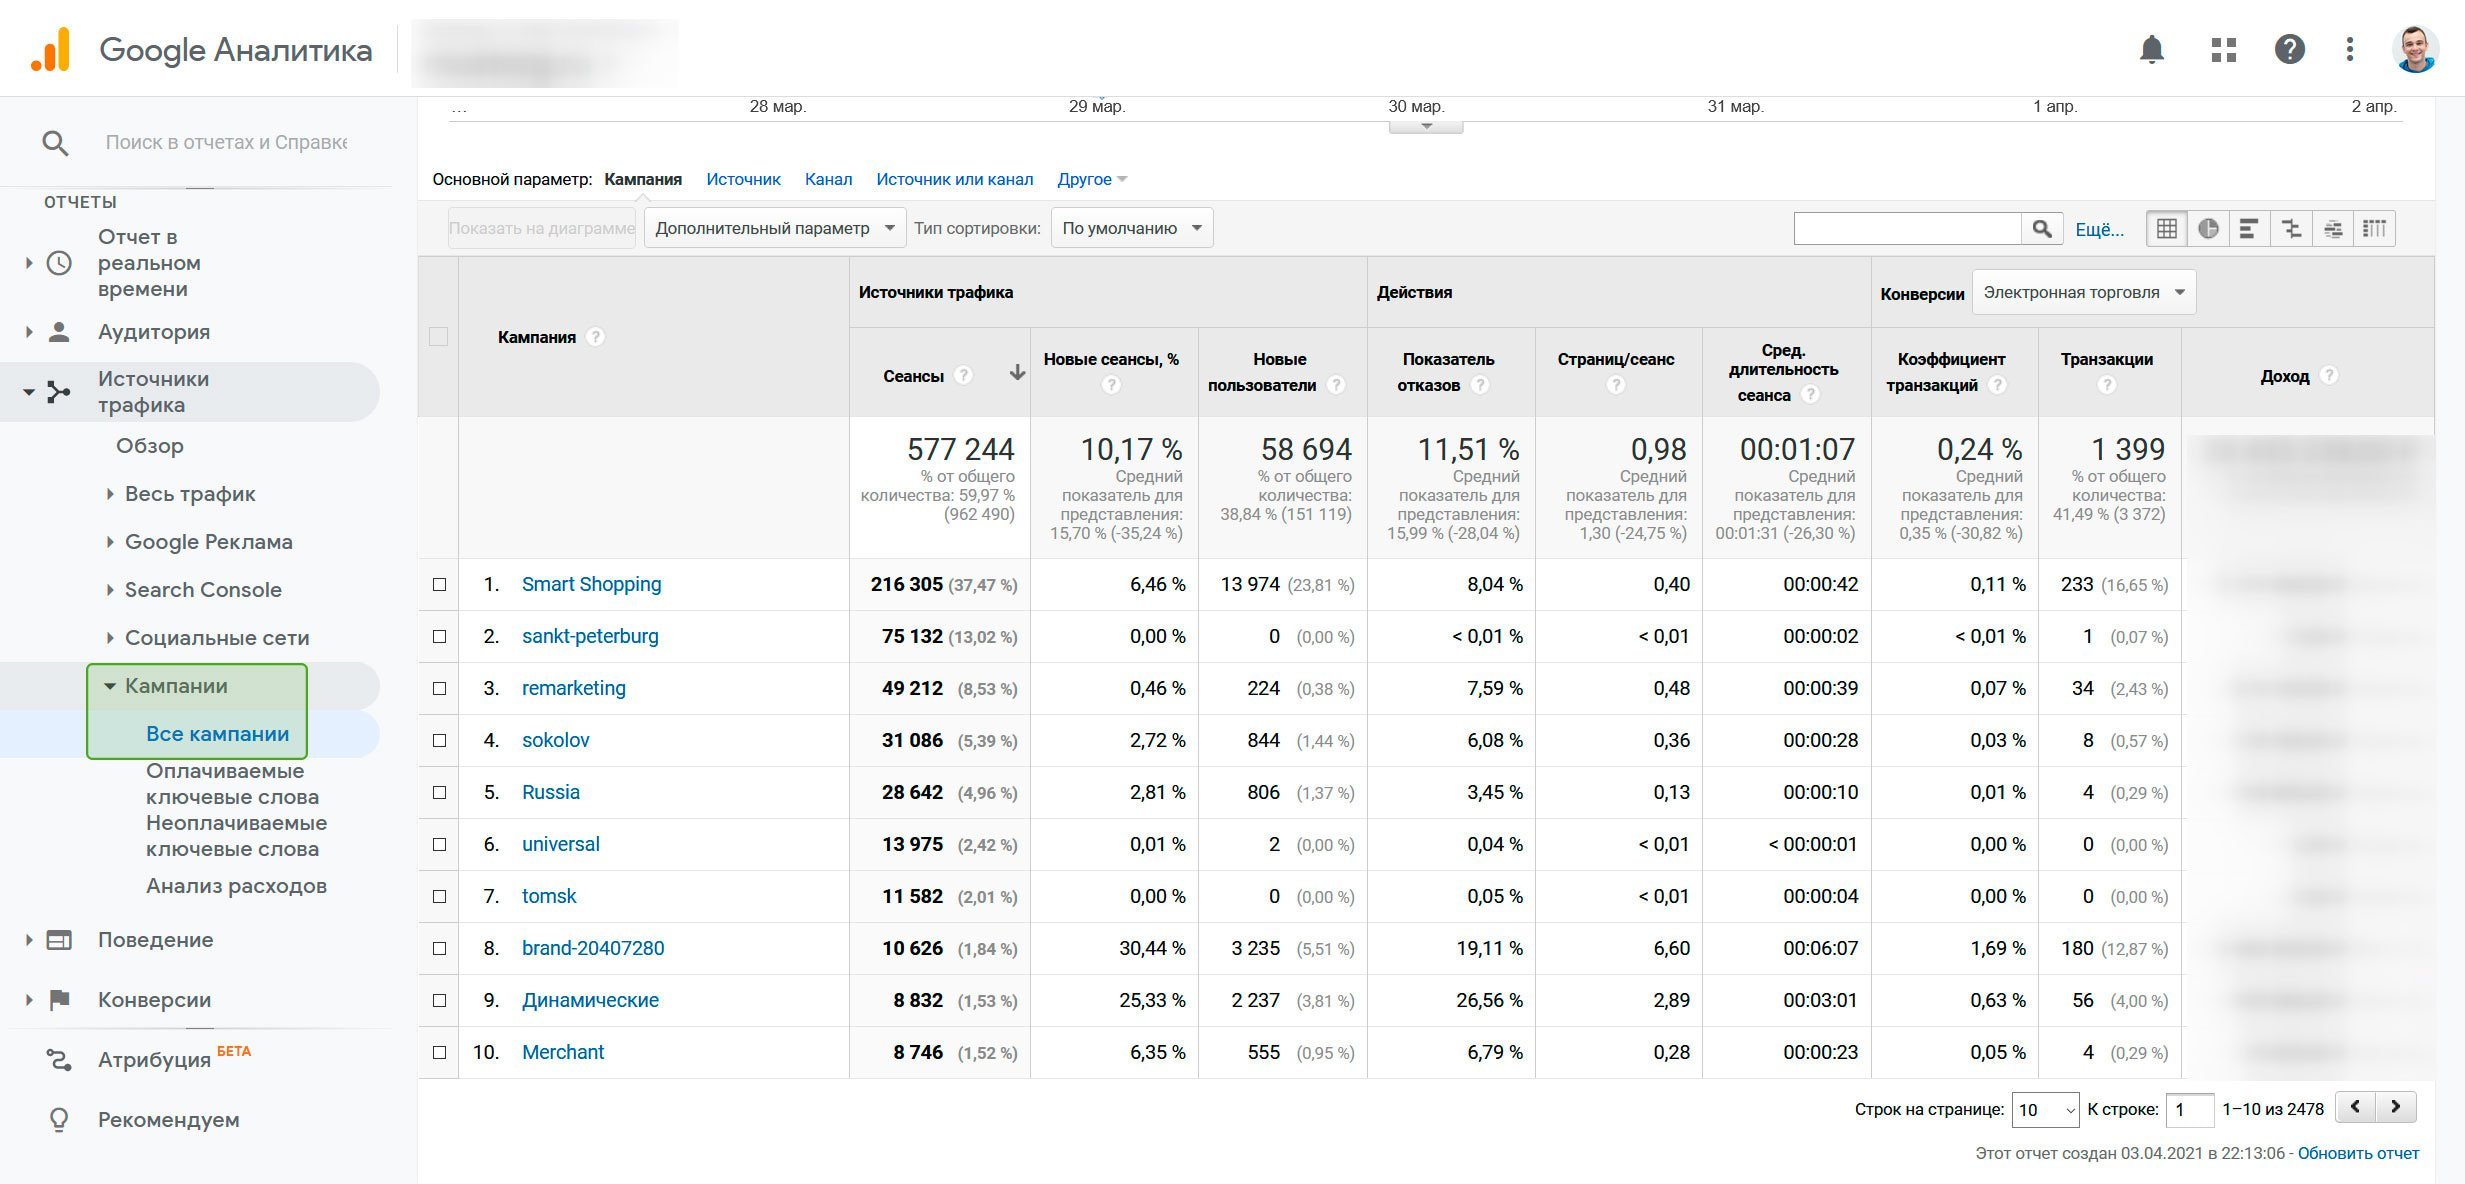 Пример отчета по кампаниям в Google Analytics